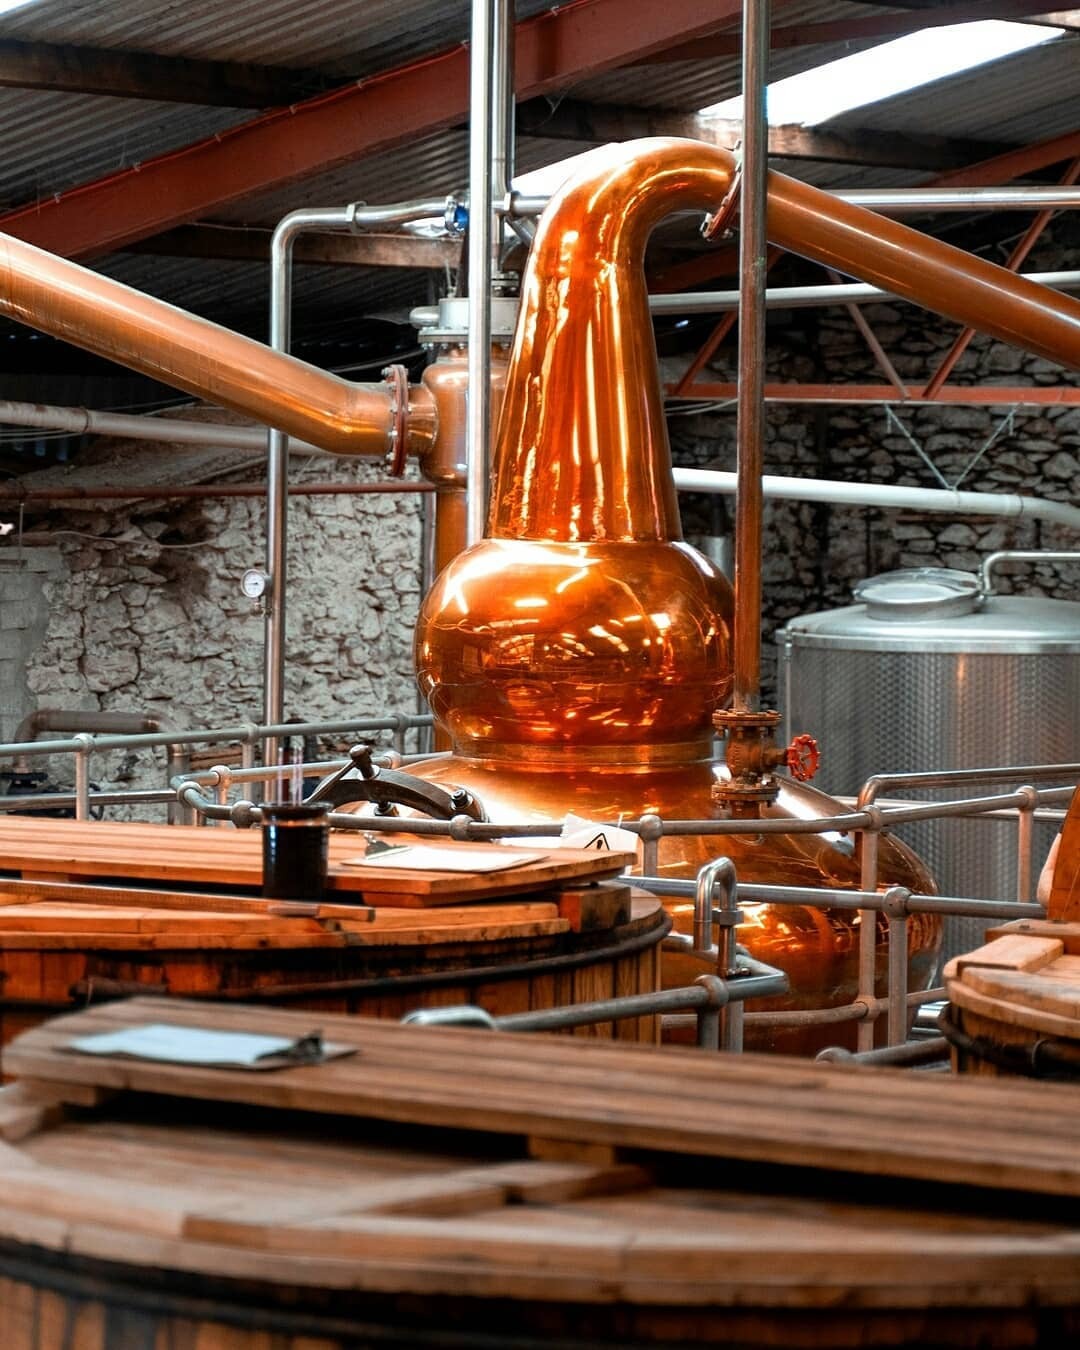 Dingle Distillery 愛爾蘭丁格爾釀酒廠